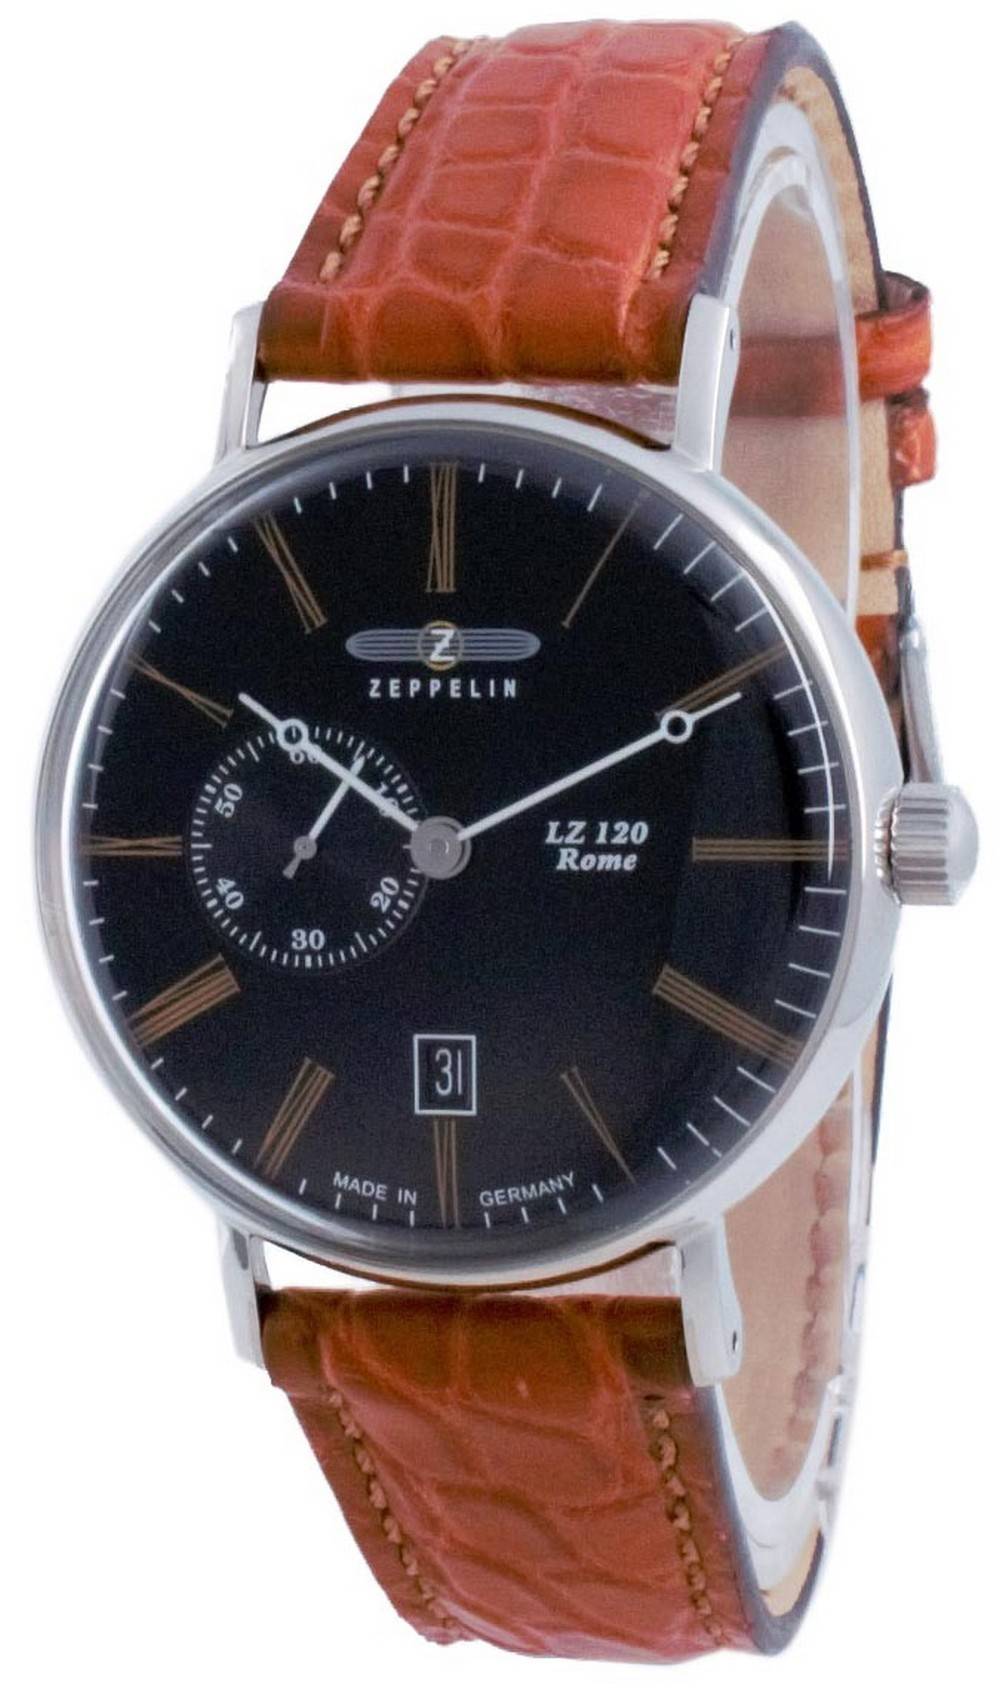 Zeppelin LZ120 Rome Black Dial Automatic 7104-2 71042 Men's Watch